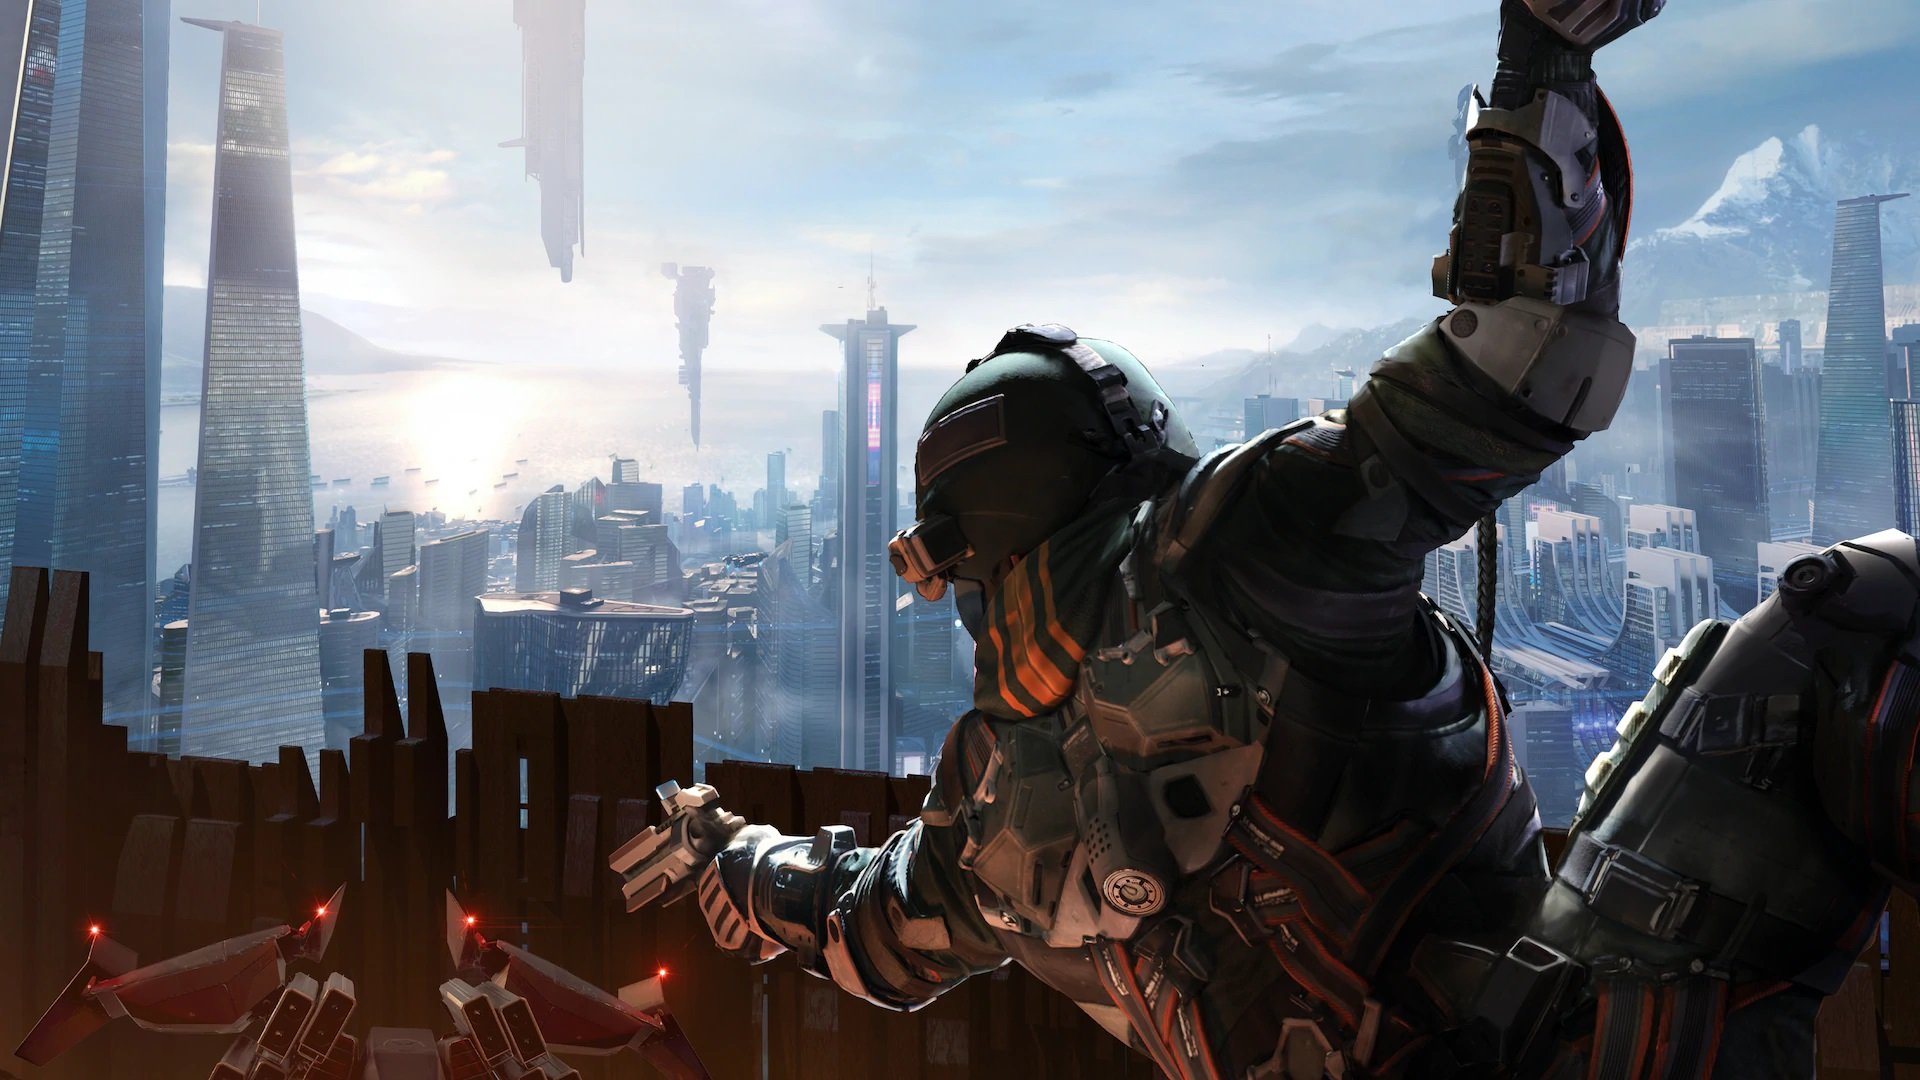 Killzone Shadow Fall PS4 bundles unveiled – PlayStation.Blog